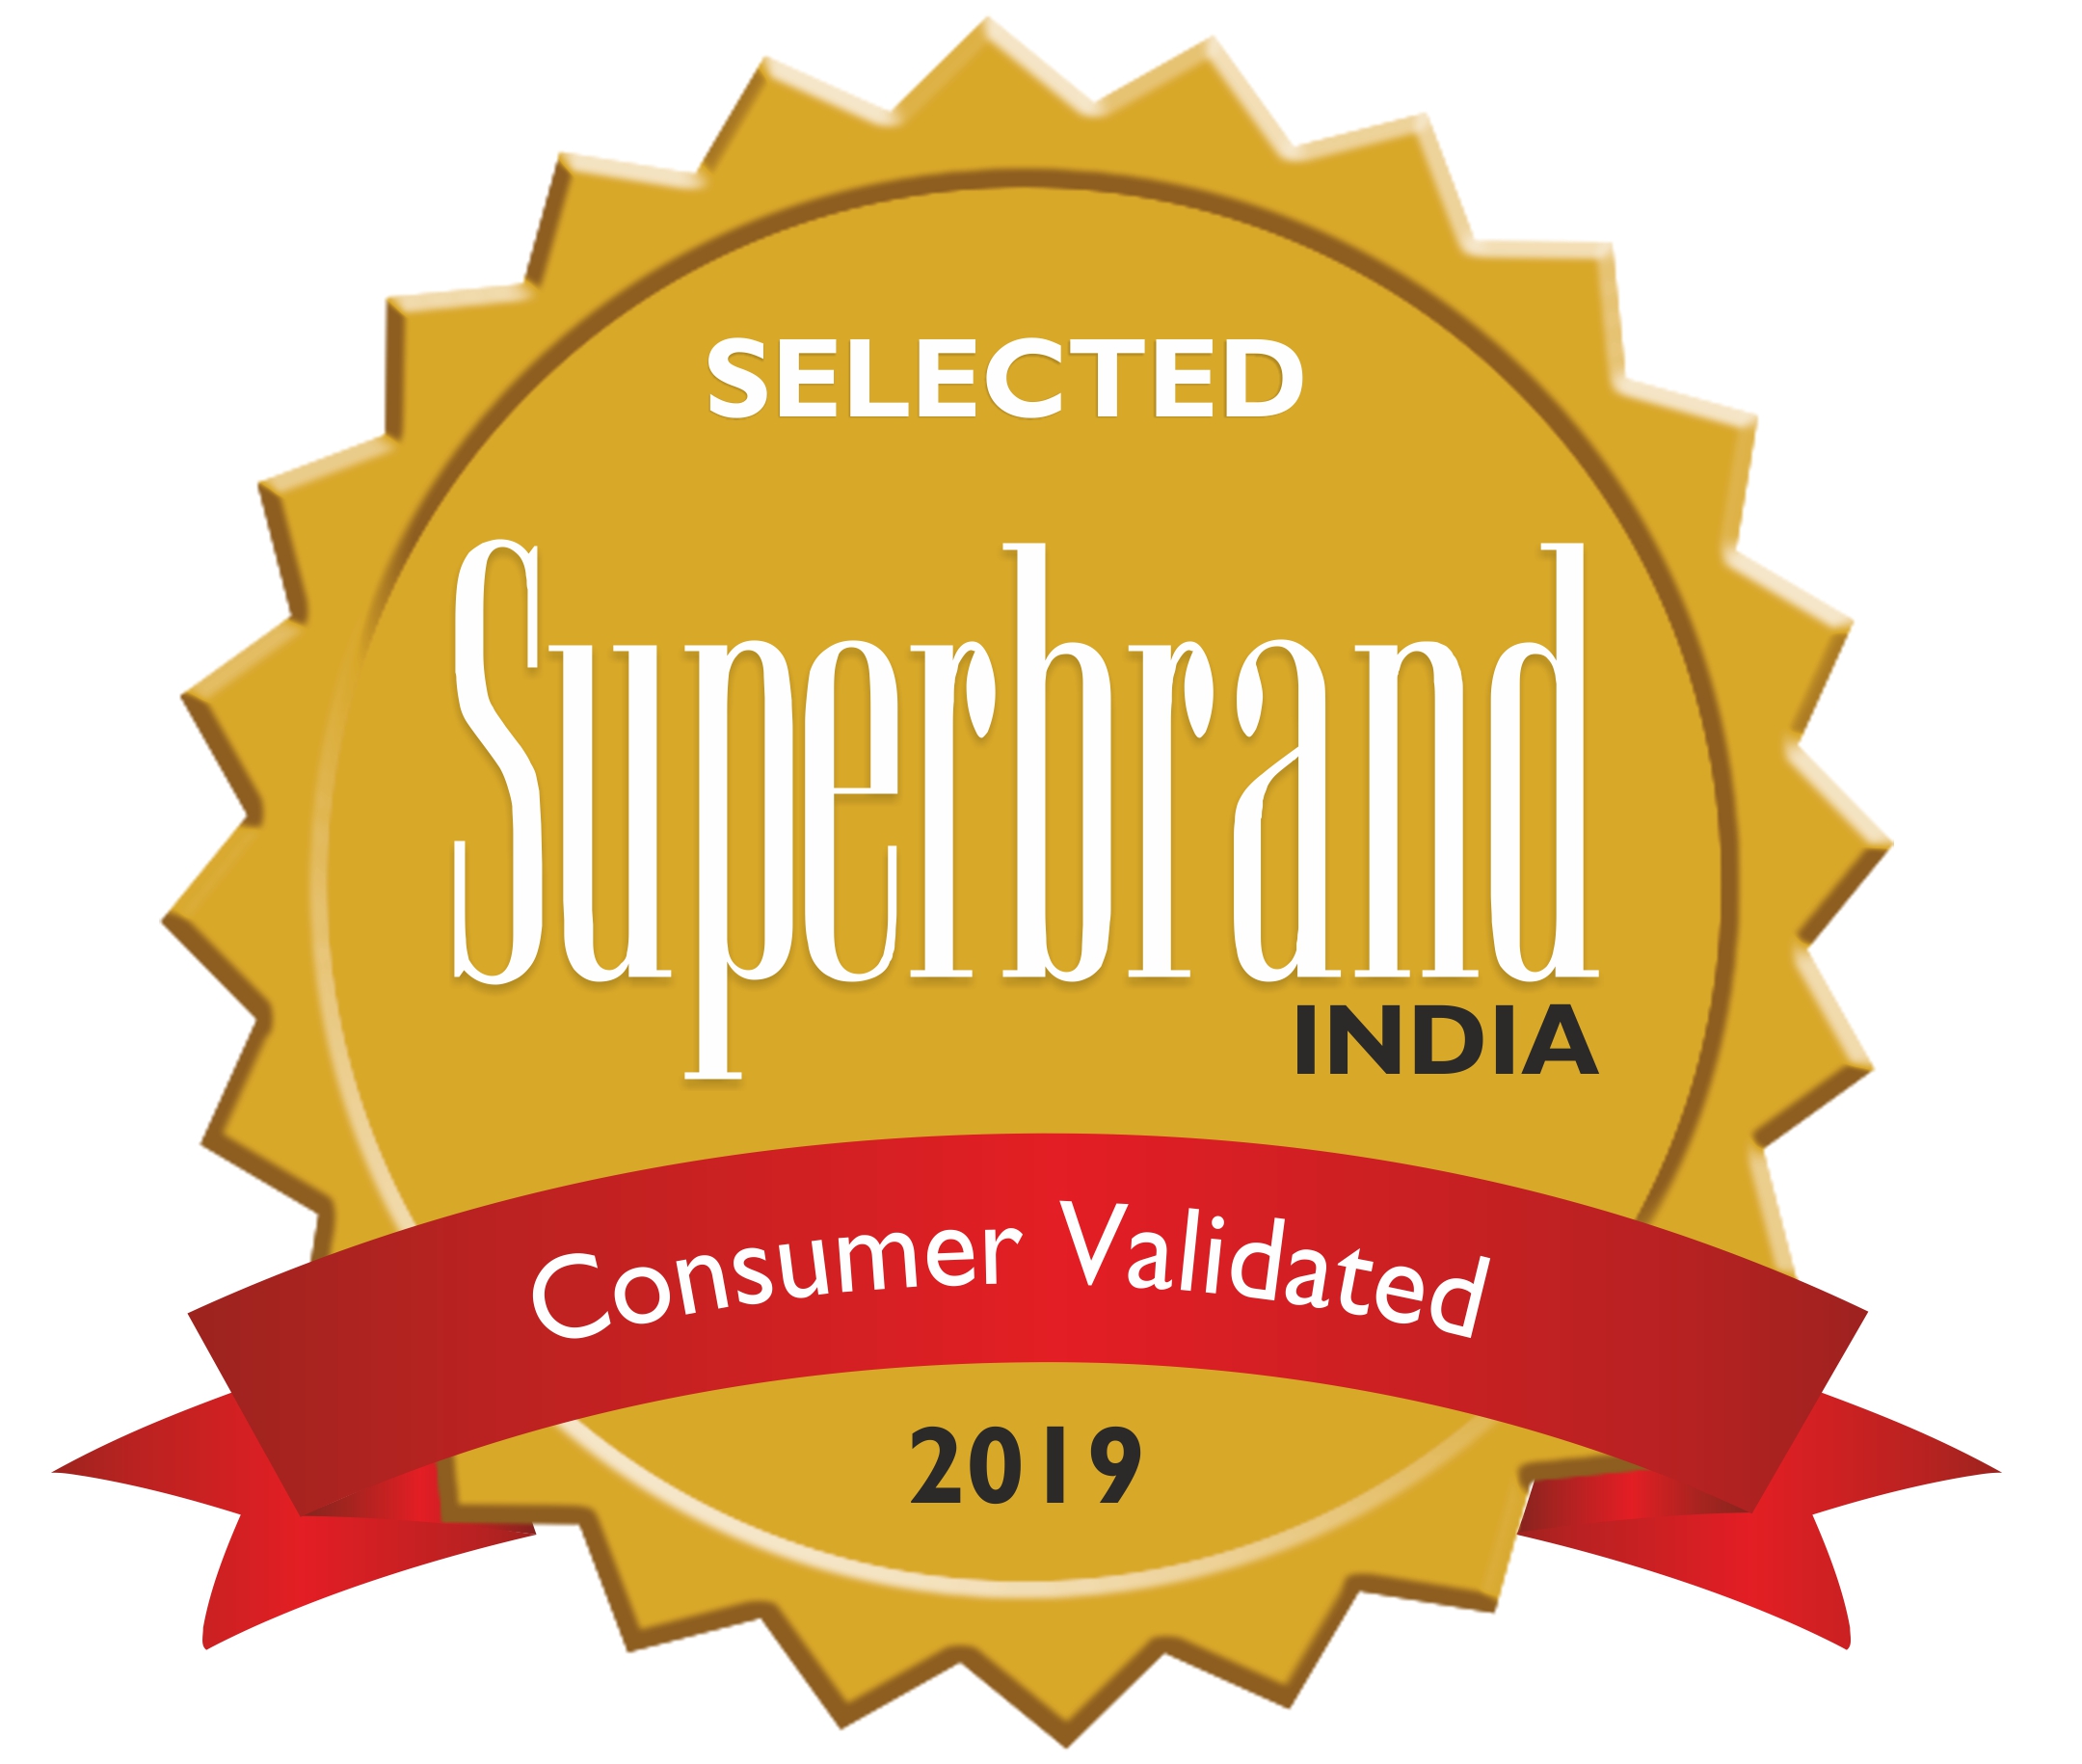 Superbrands 2019 - Consumer Validated Award Seal